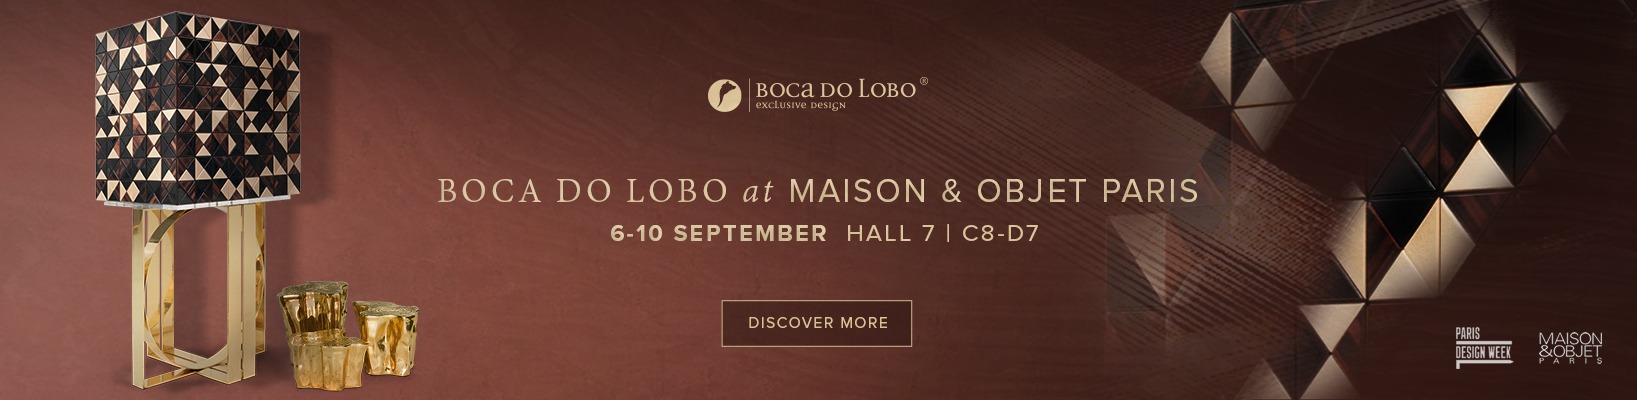 Boca do Lobo at Maison & Objet Paris September 2019  Best Interior Designers &#8211; Meet Richard Mishaan Banner 20Maison